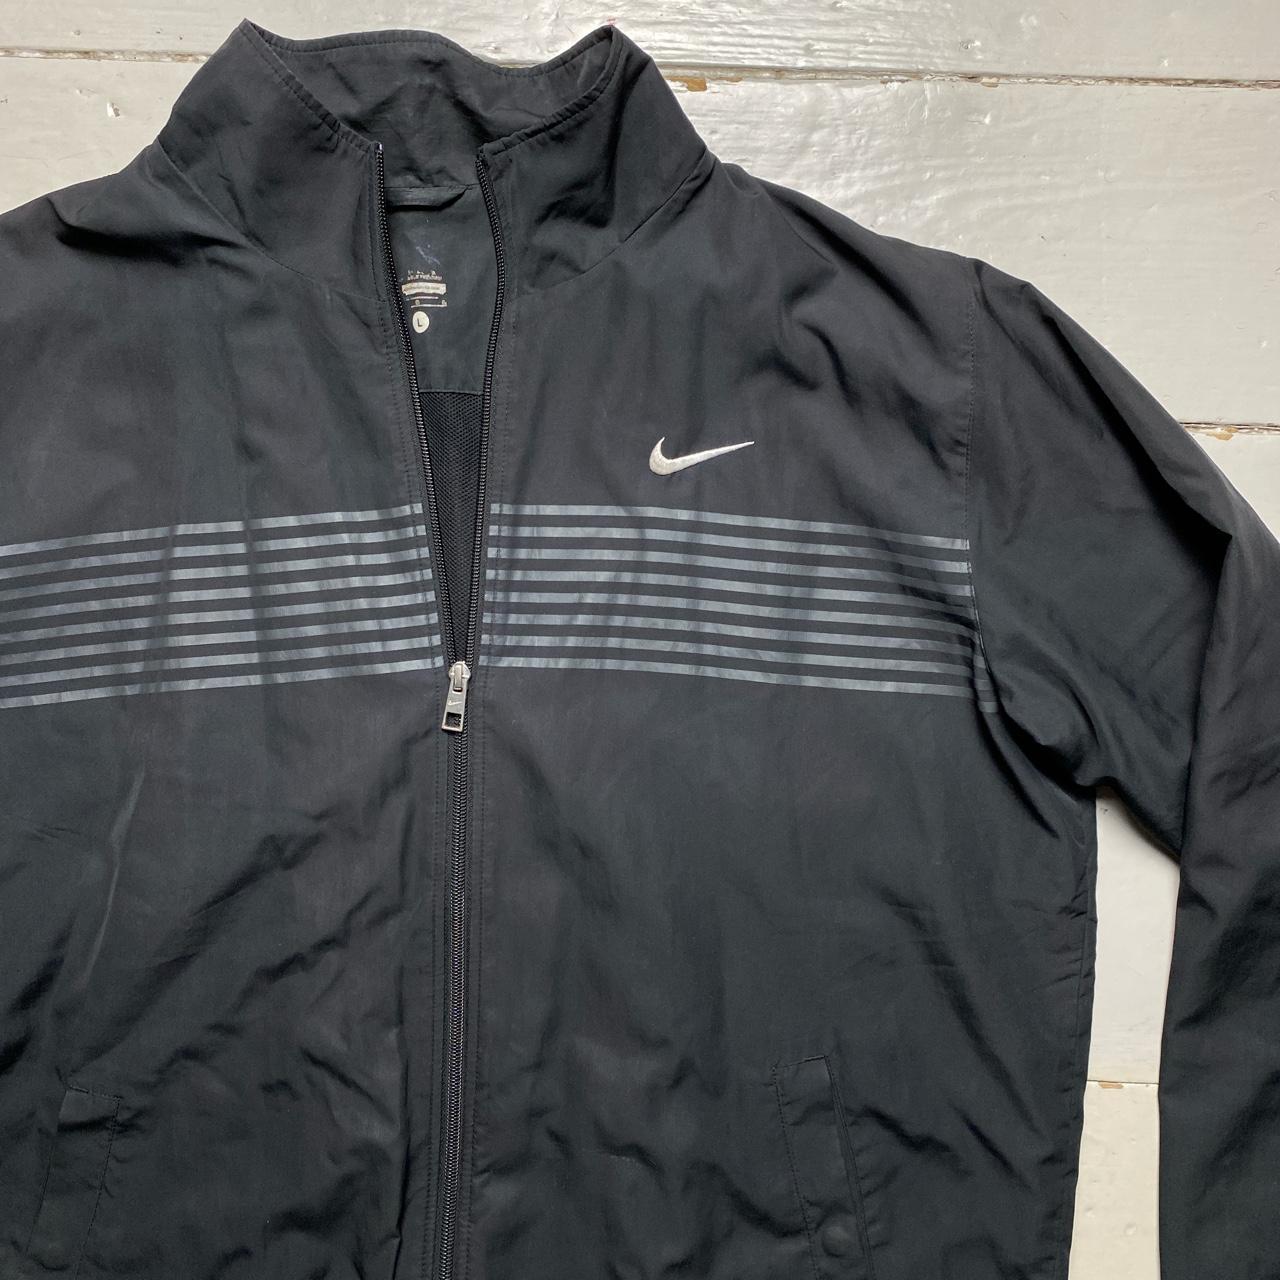 Nike Swoosh Vintage Tracksuit Shell Jacket Black and White